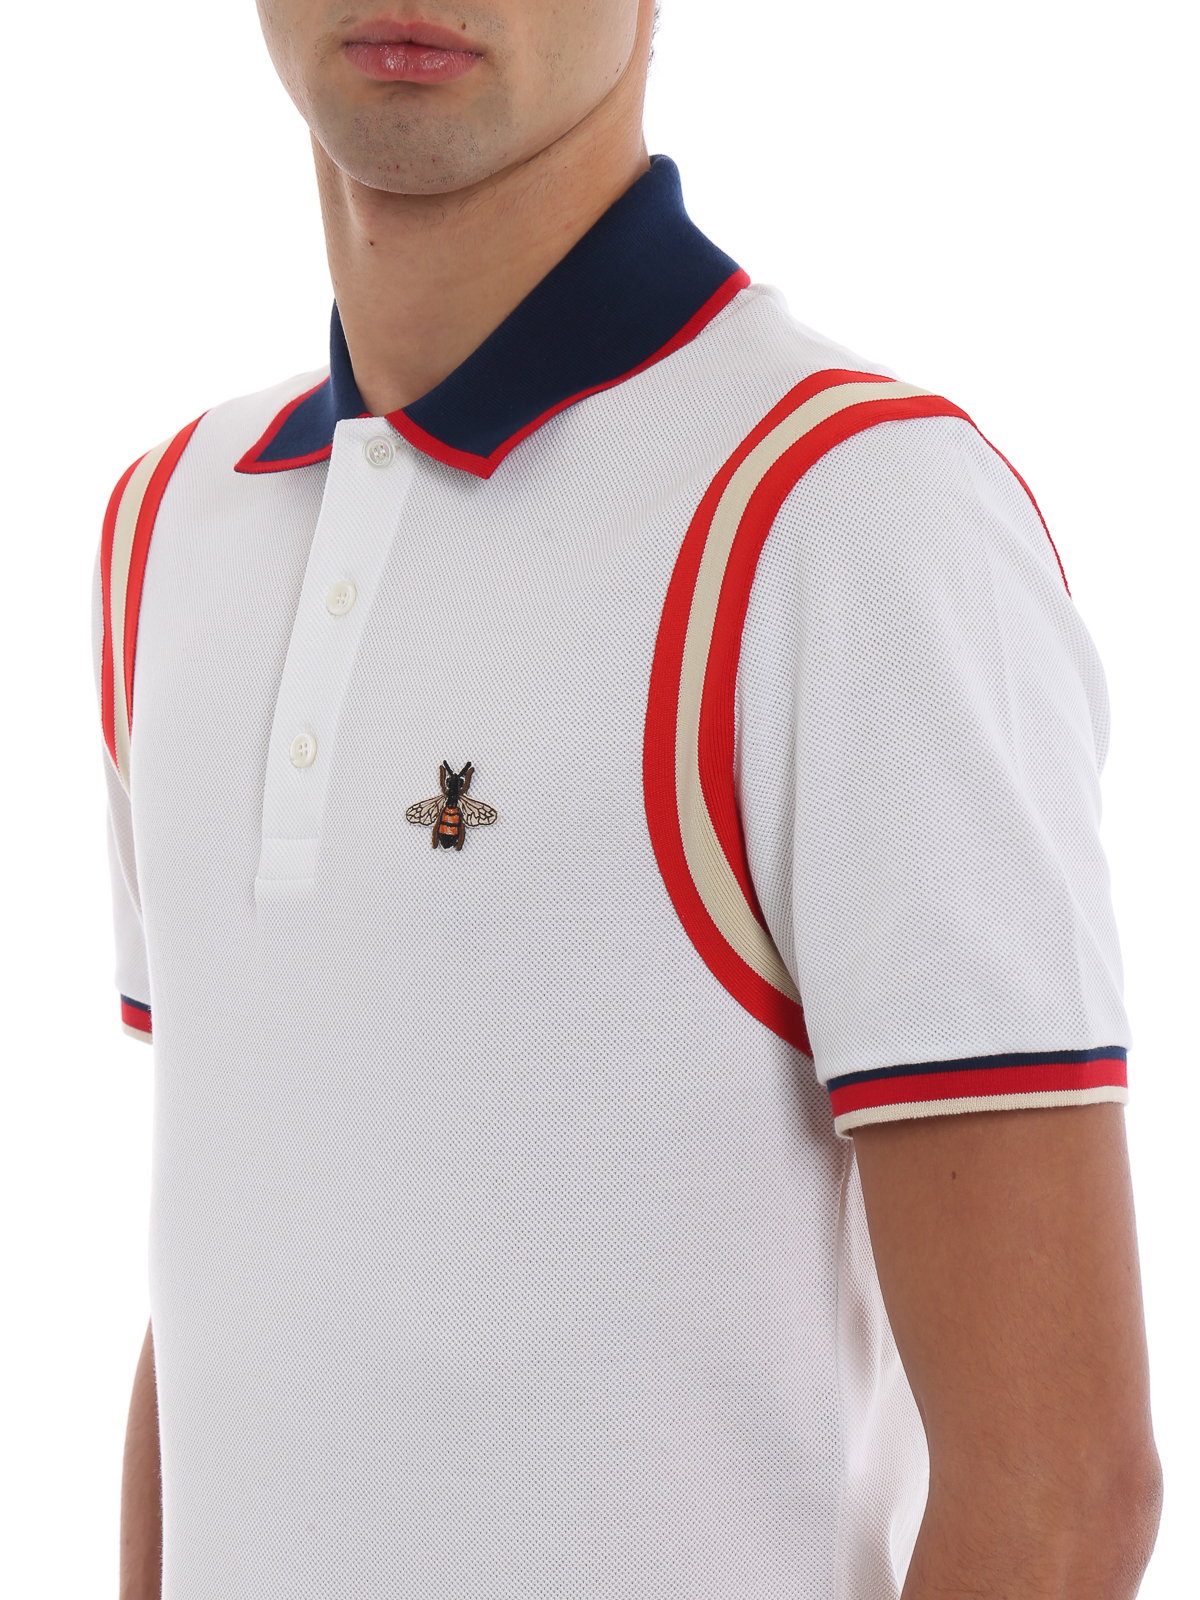 Polo shirts - patch white cotton piquet polo - 500971X9M379134